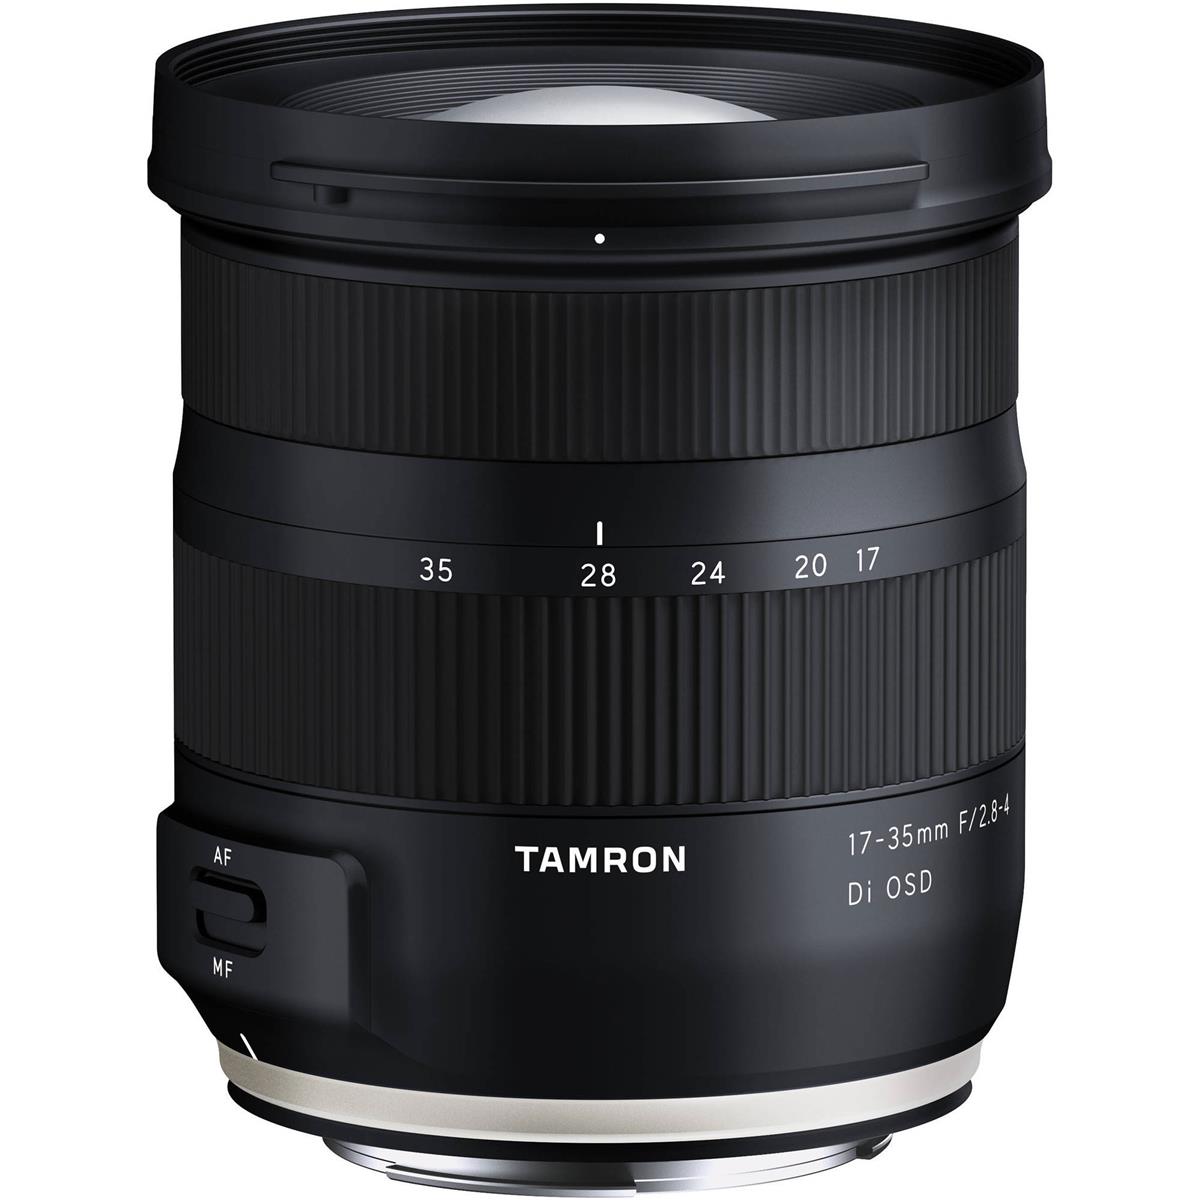 Image of Tamron 17-35mm f/2.8 Di OSD Wide Angle Lens for Nikon F Mount